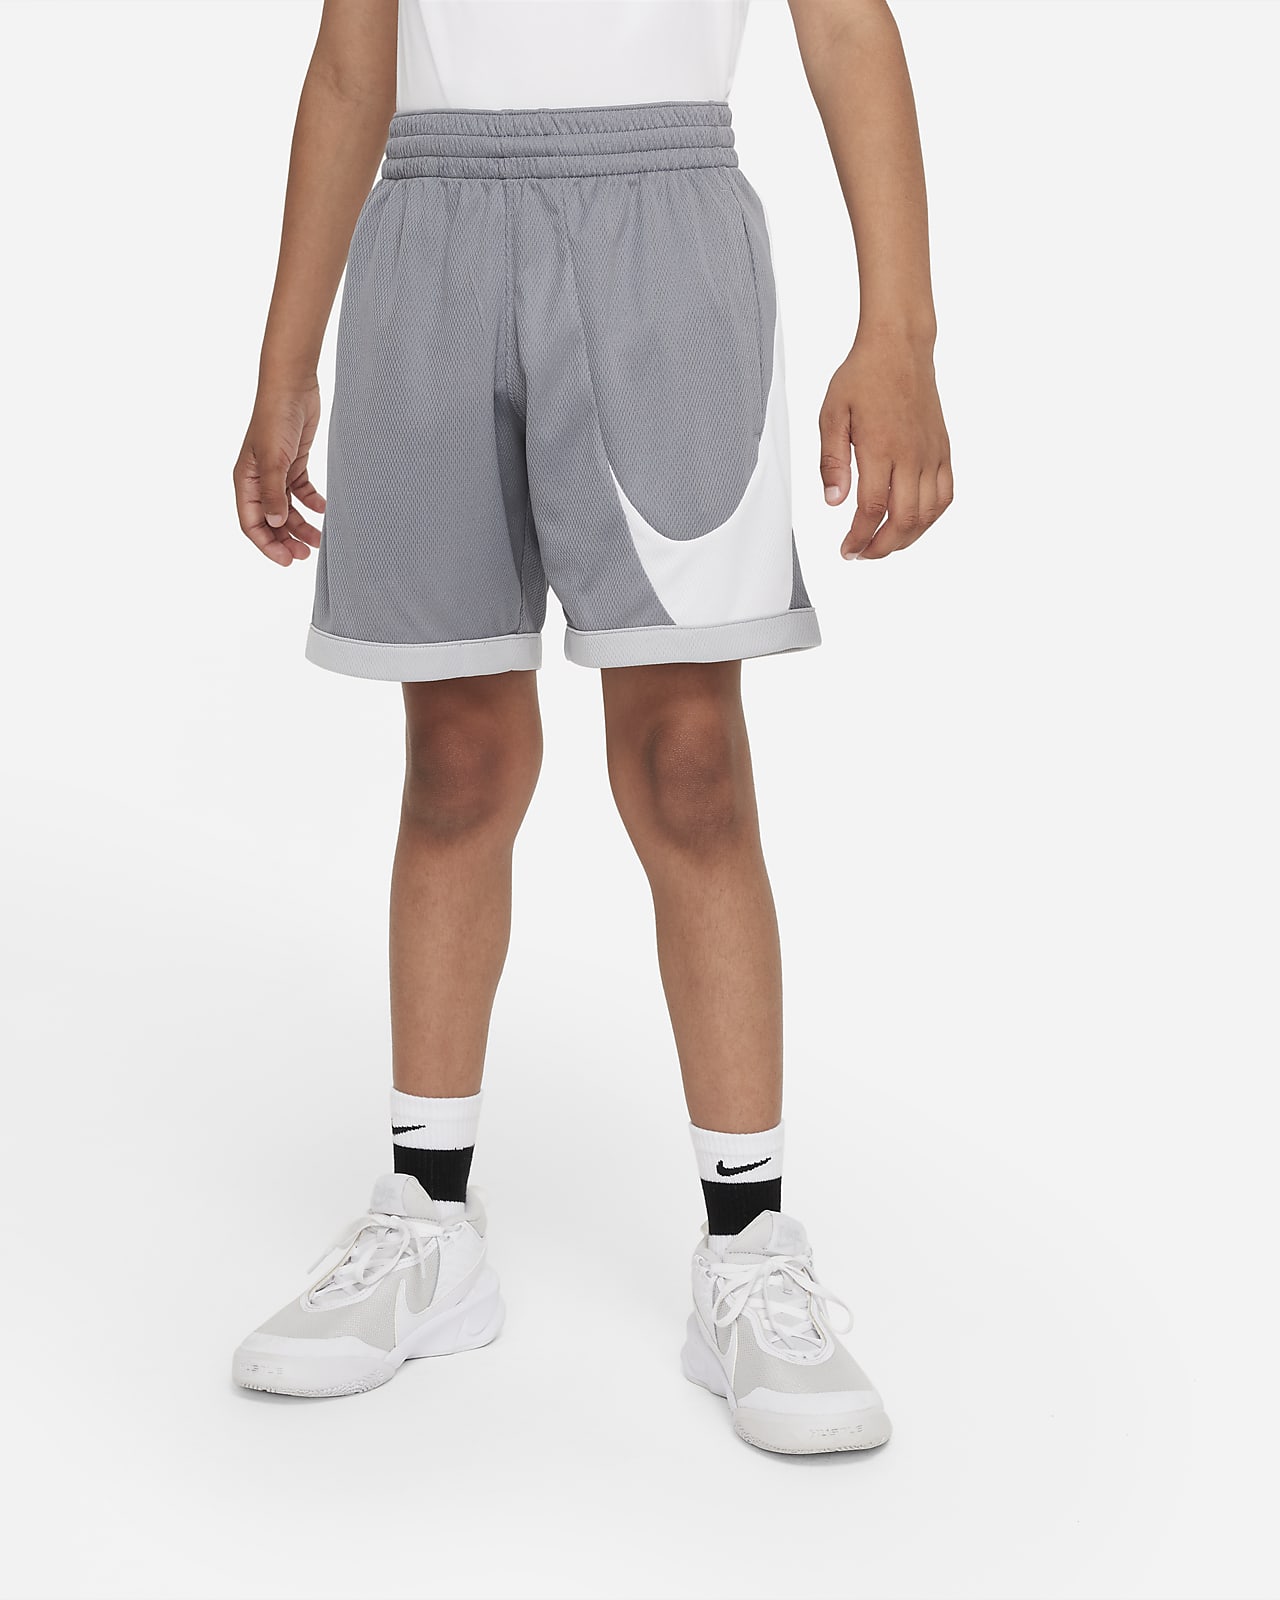 Men's NBA Basketball Shorts Large Long Pockets Baggy Retro